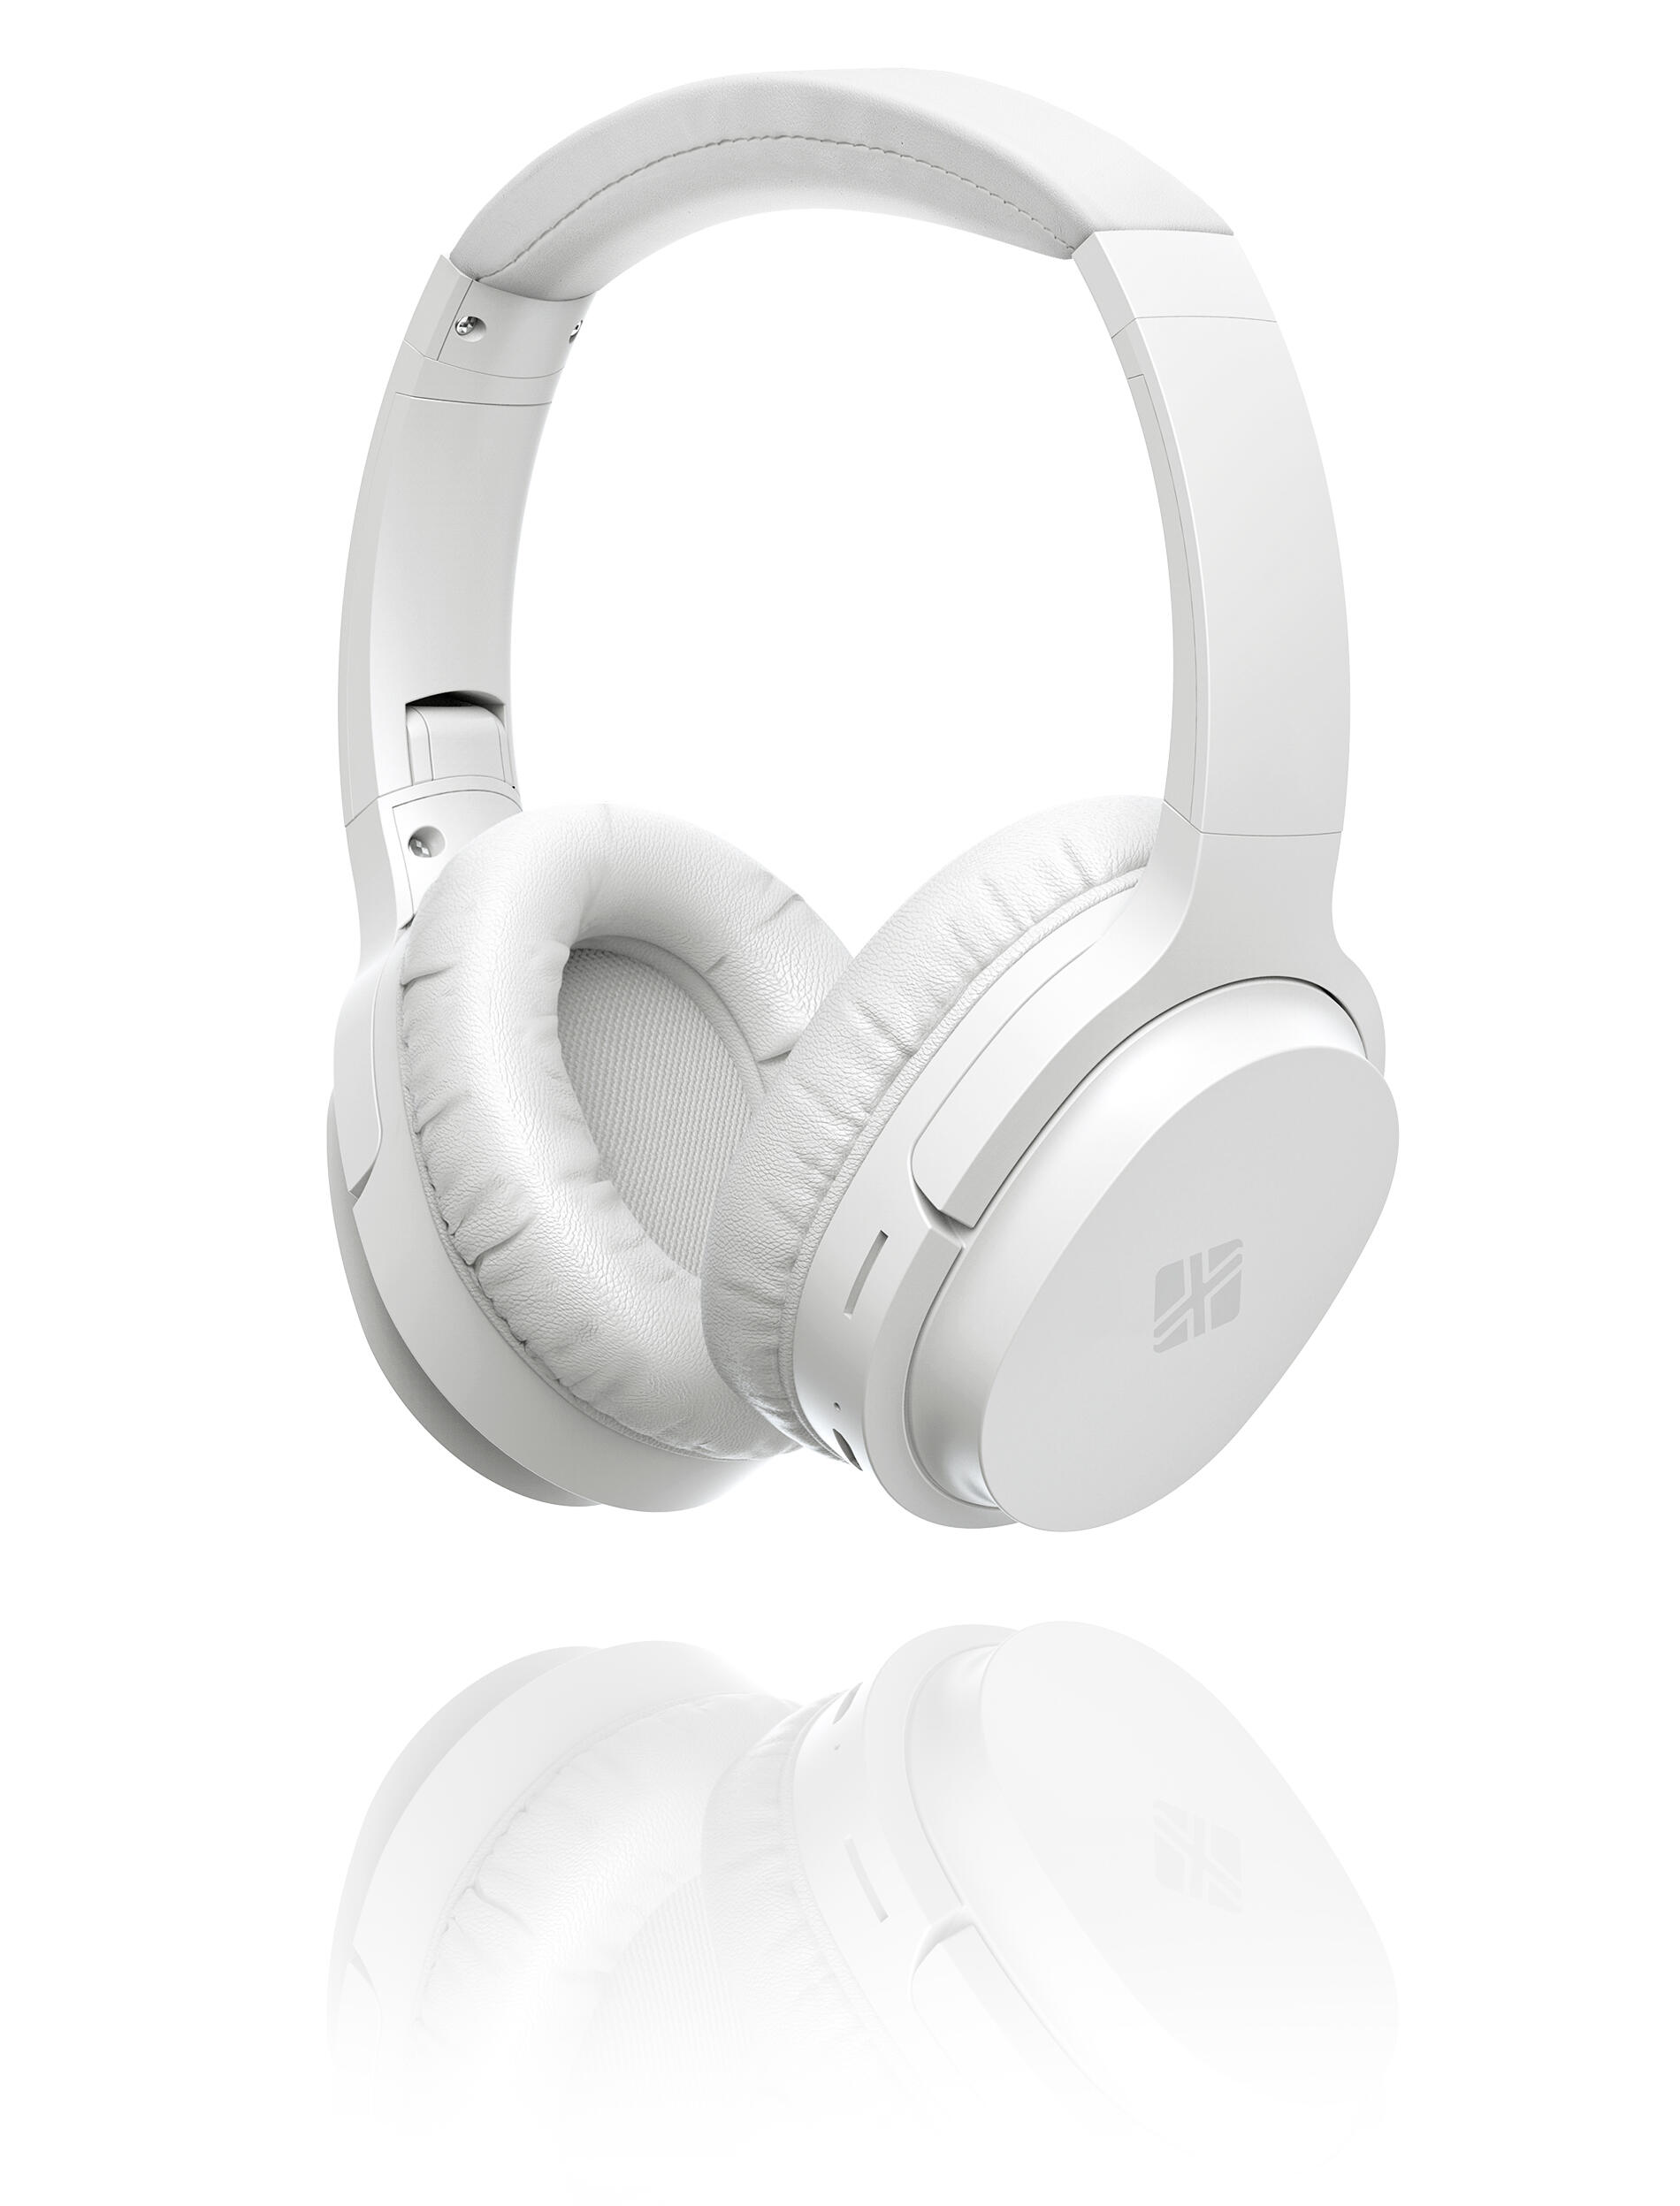 NEXT-Audiocom-X4--White-Product